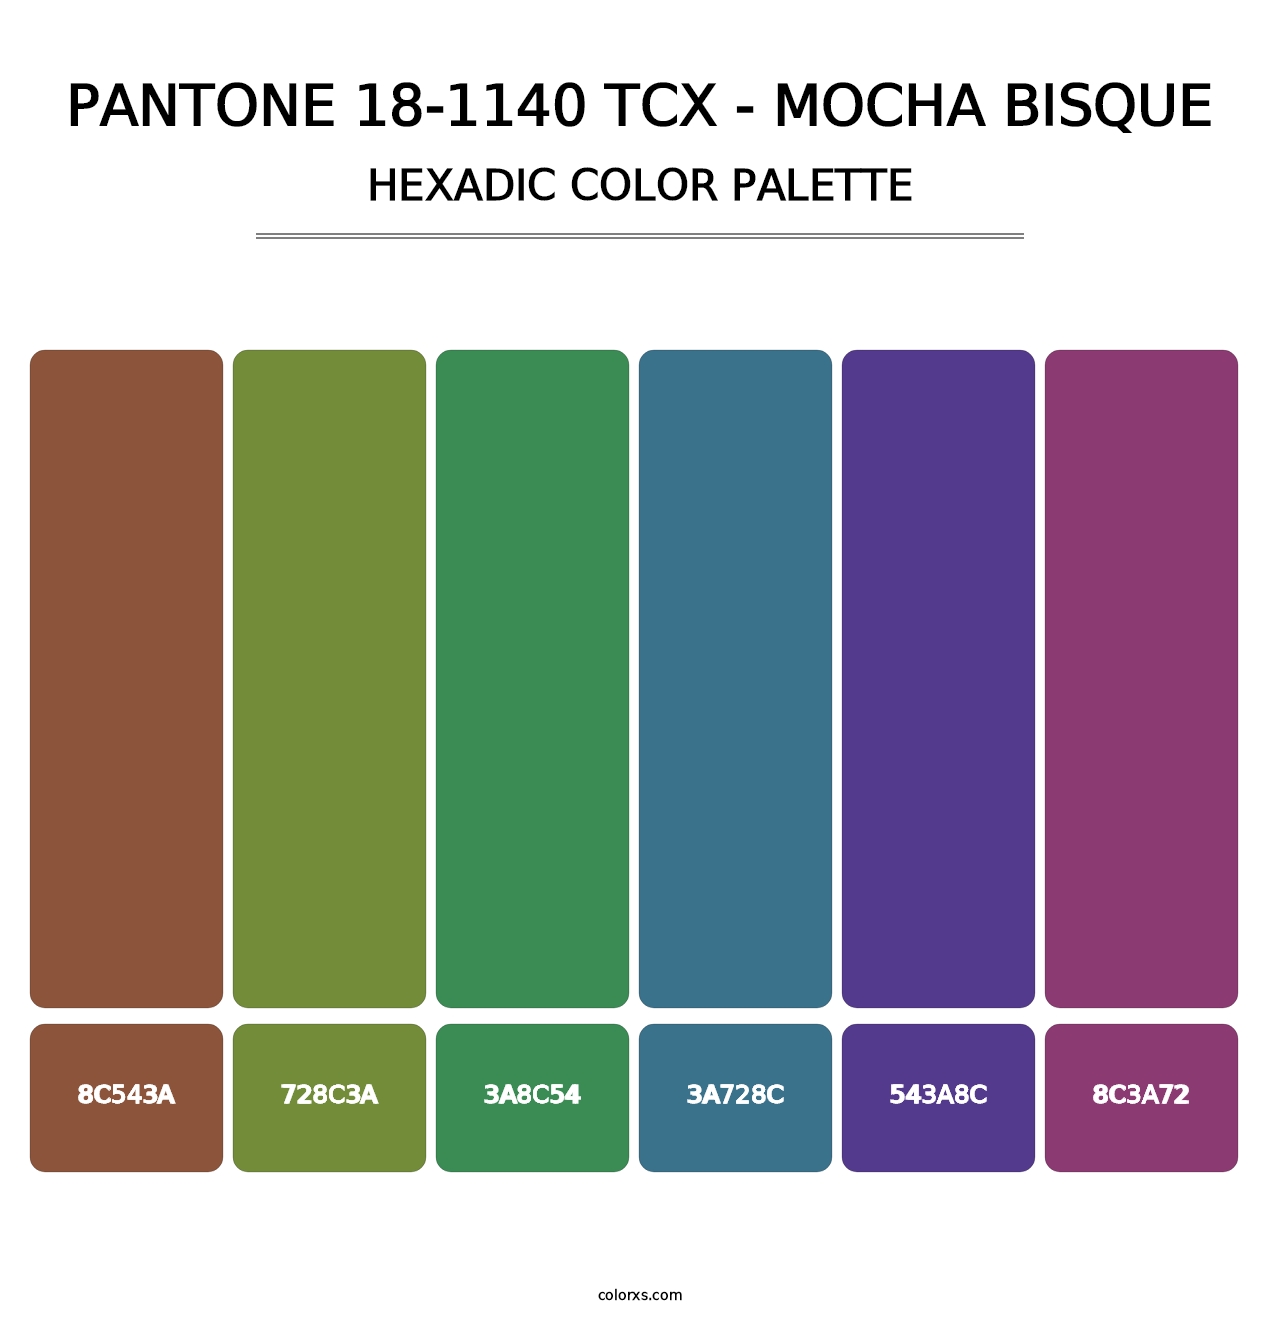 PANTONE 18-1140 TCX - Mocha Bisque - Hexadic Color Palette